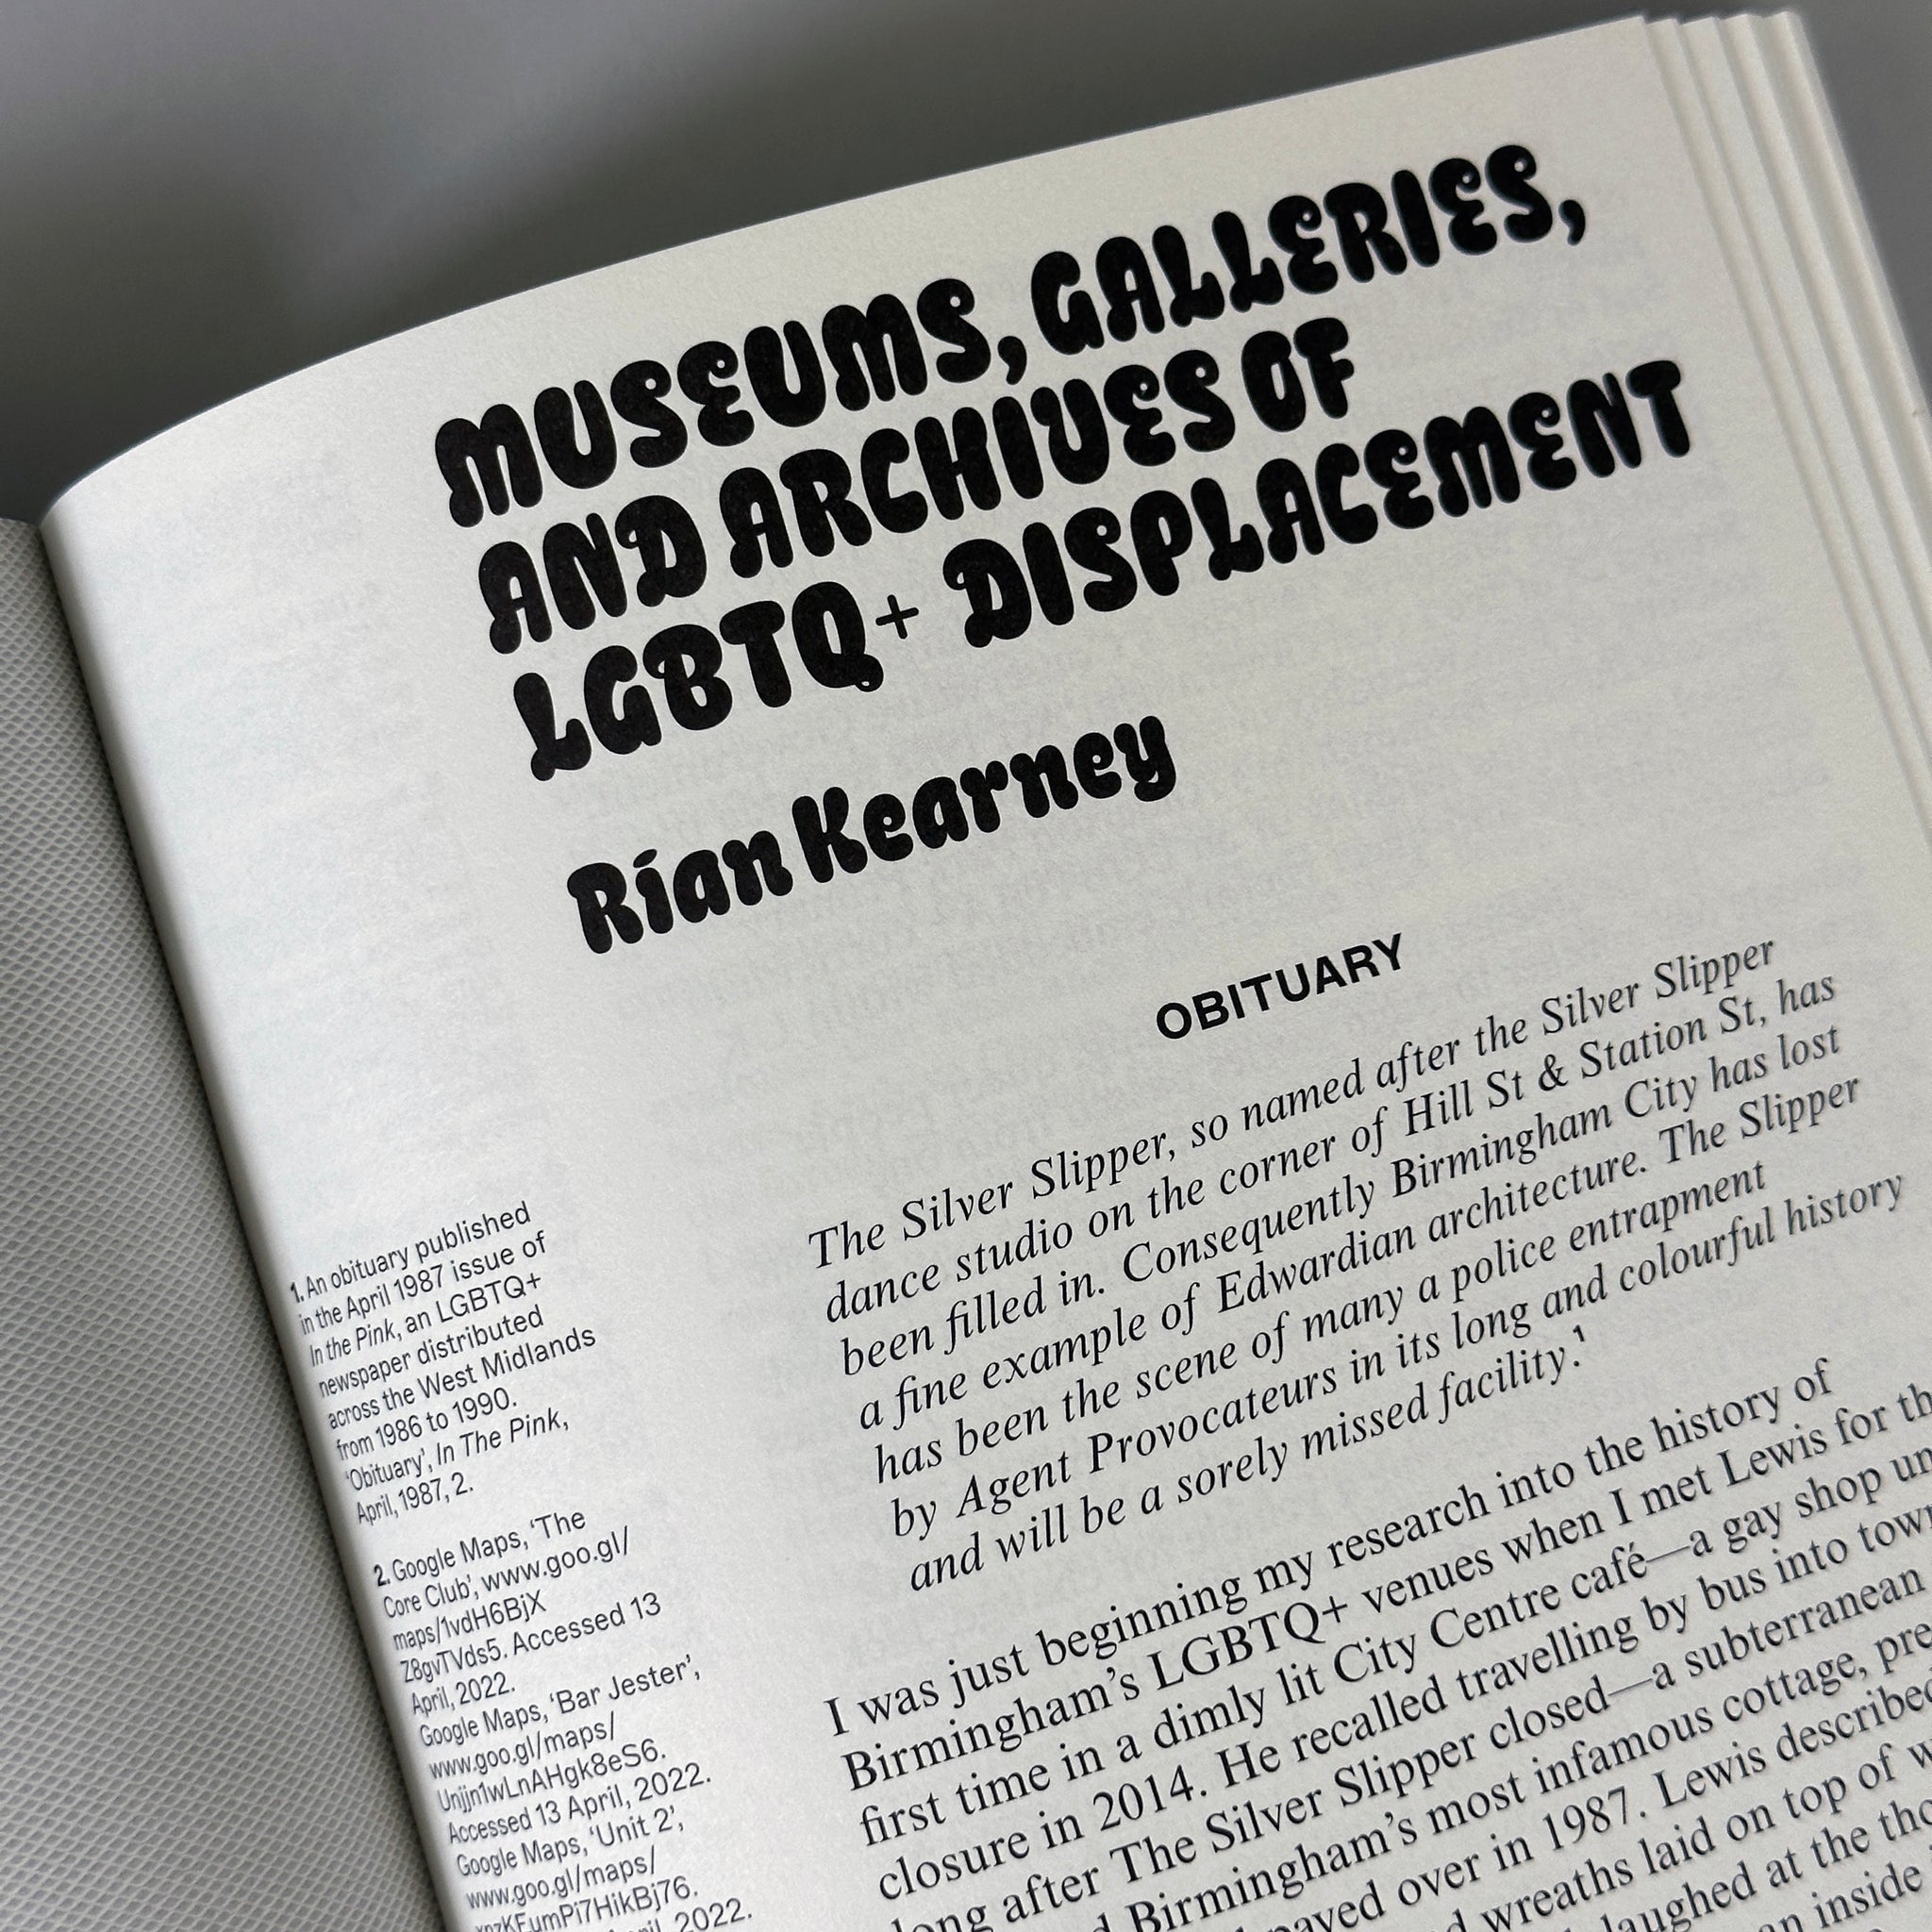 Queer Exhibition Histories